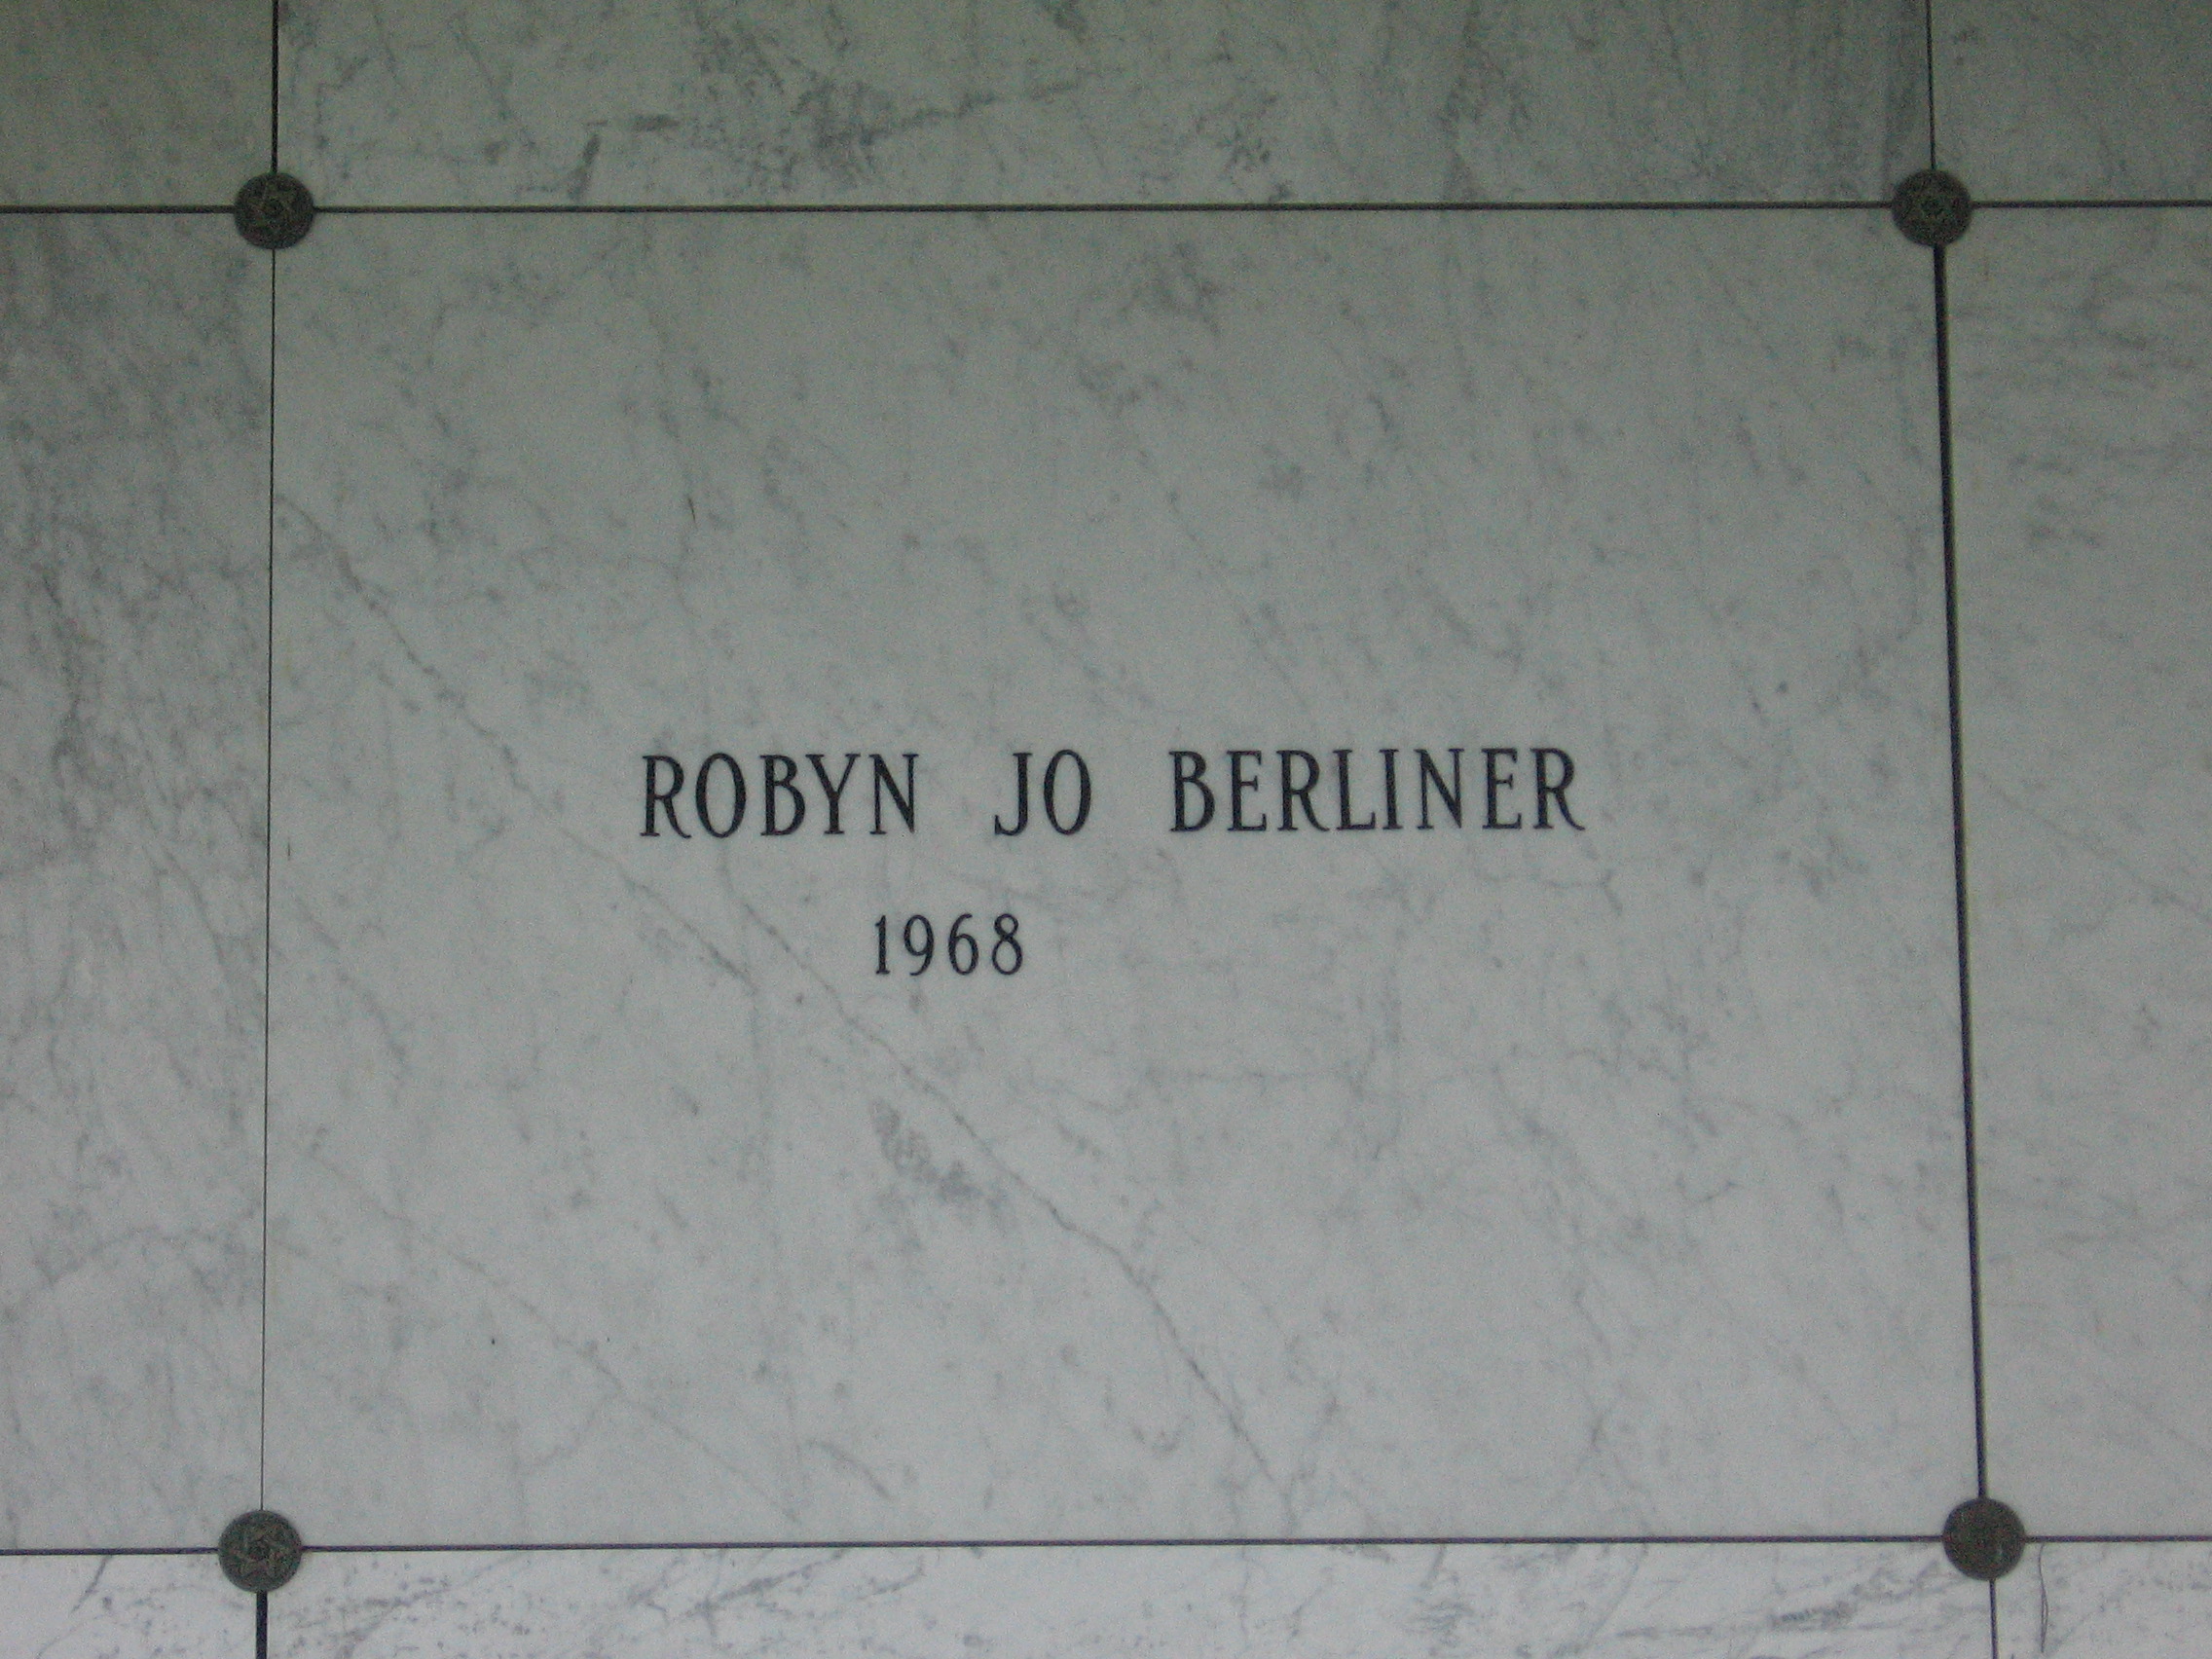 Robyn Jo Berliner